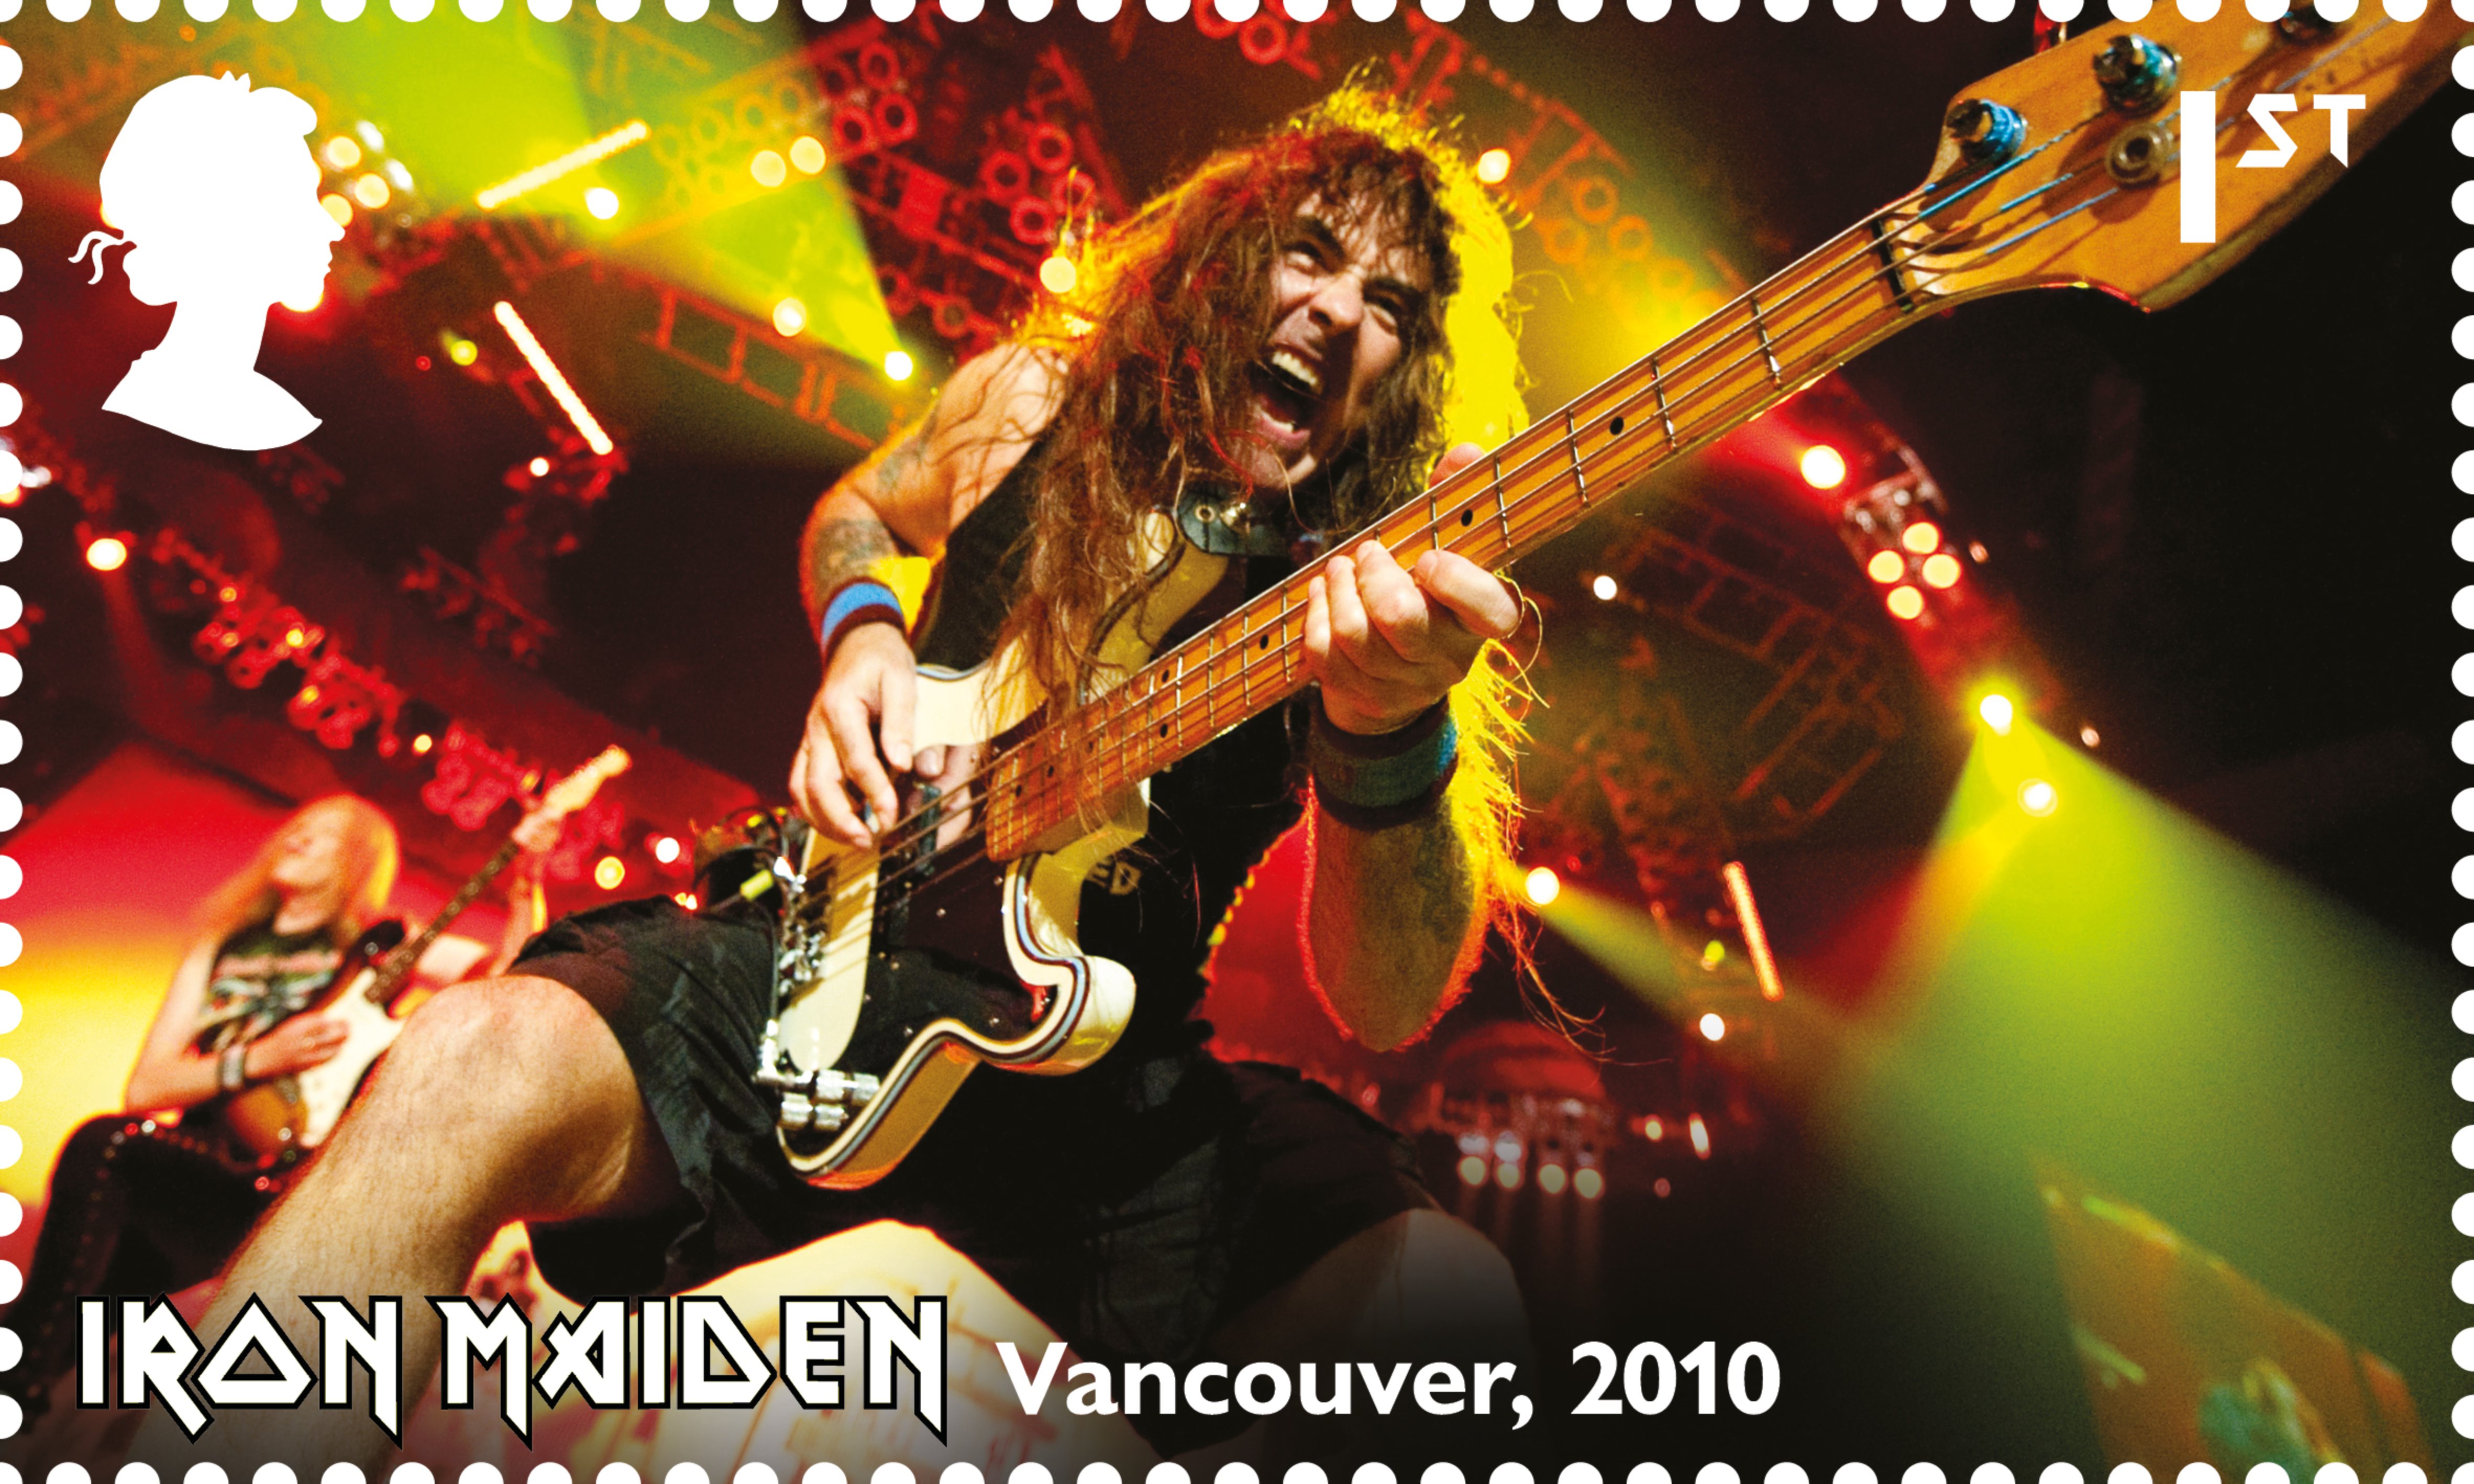 A stamp version of Steve Harris in Vancouver in June 2010